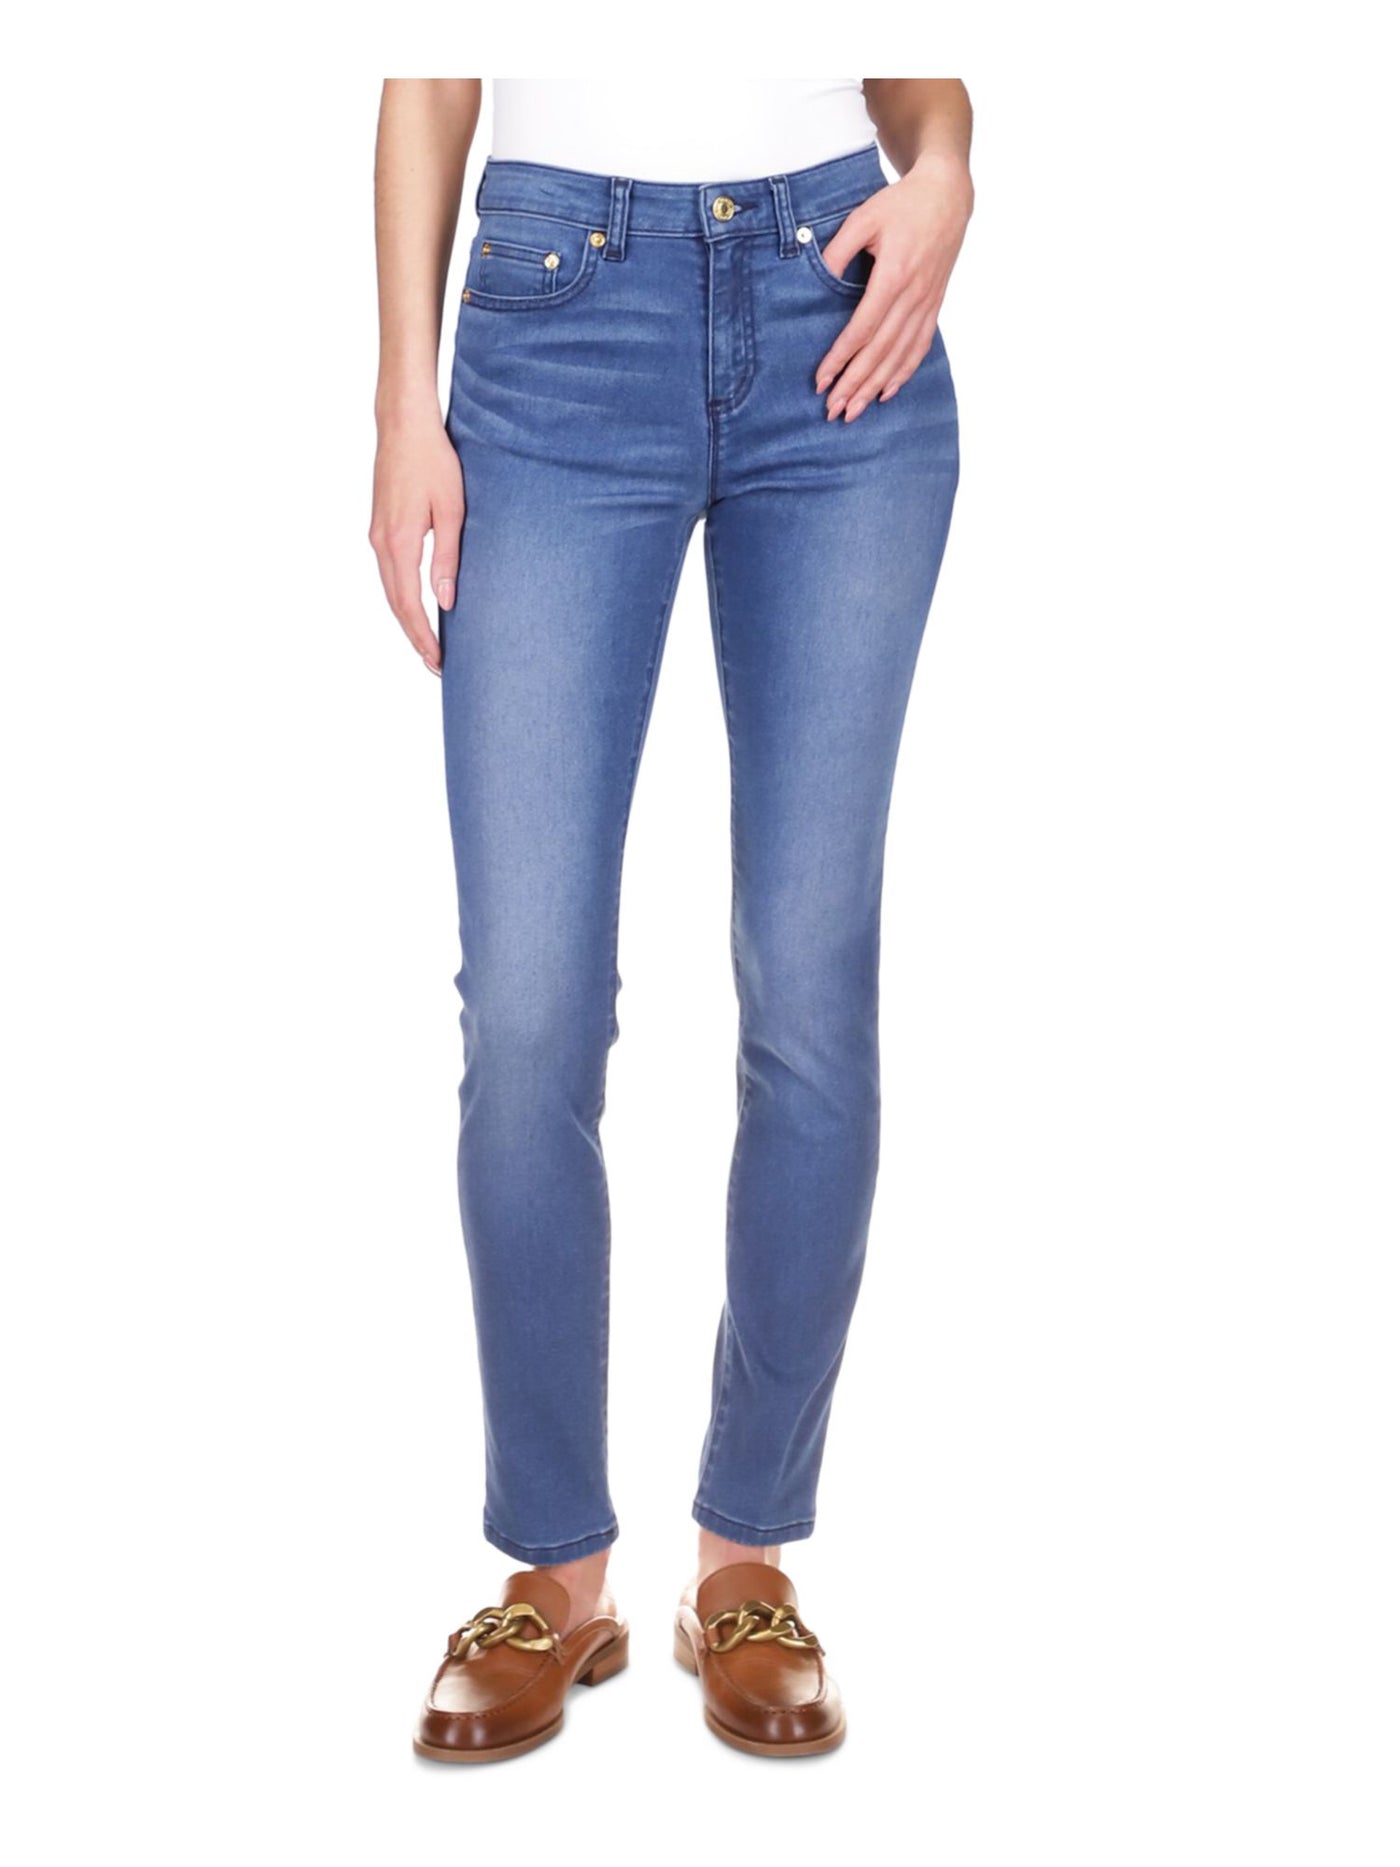 MICHAEL KORS Womens Blue Stretch Zippered Pocketed Skinny High Waist Jeans 14